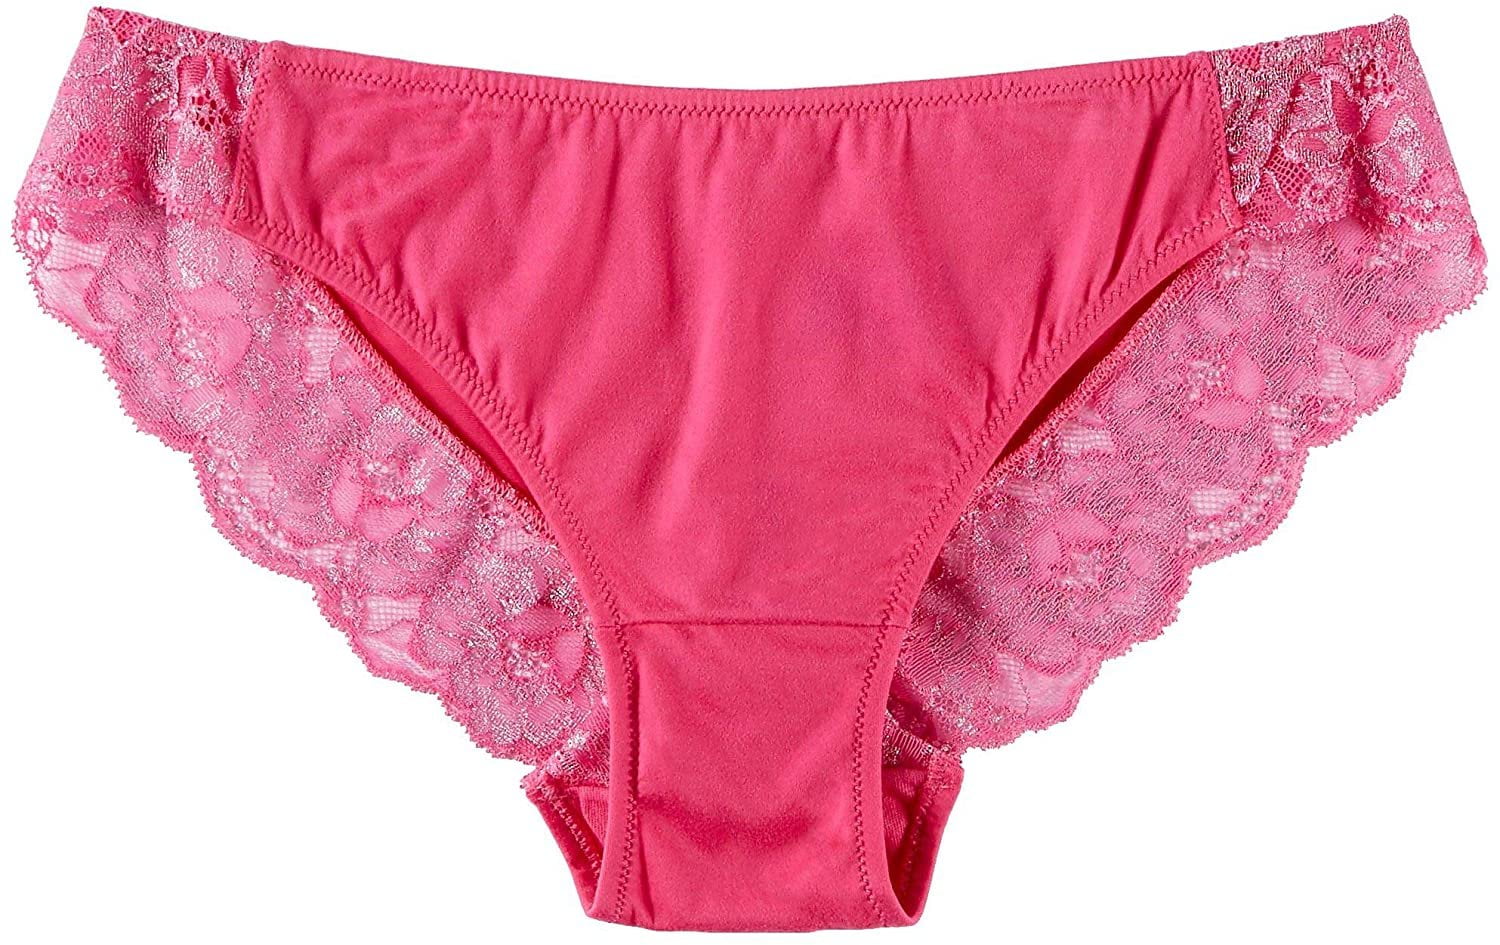 Maidenform Comfort Devotion Lace Back Tanga Panty 6 Prim Pink